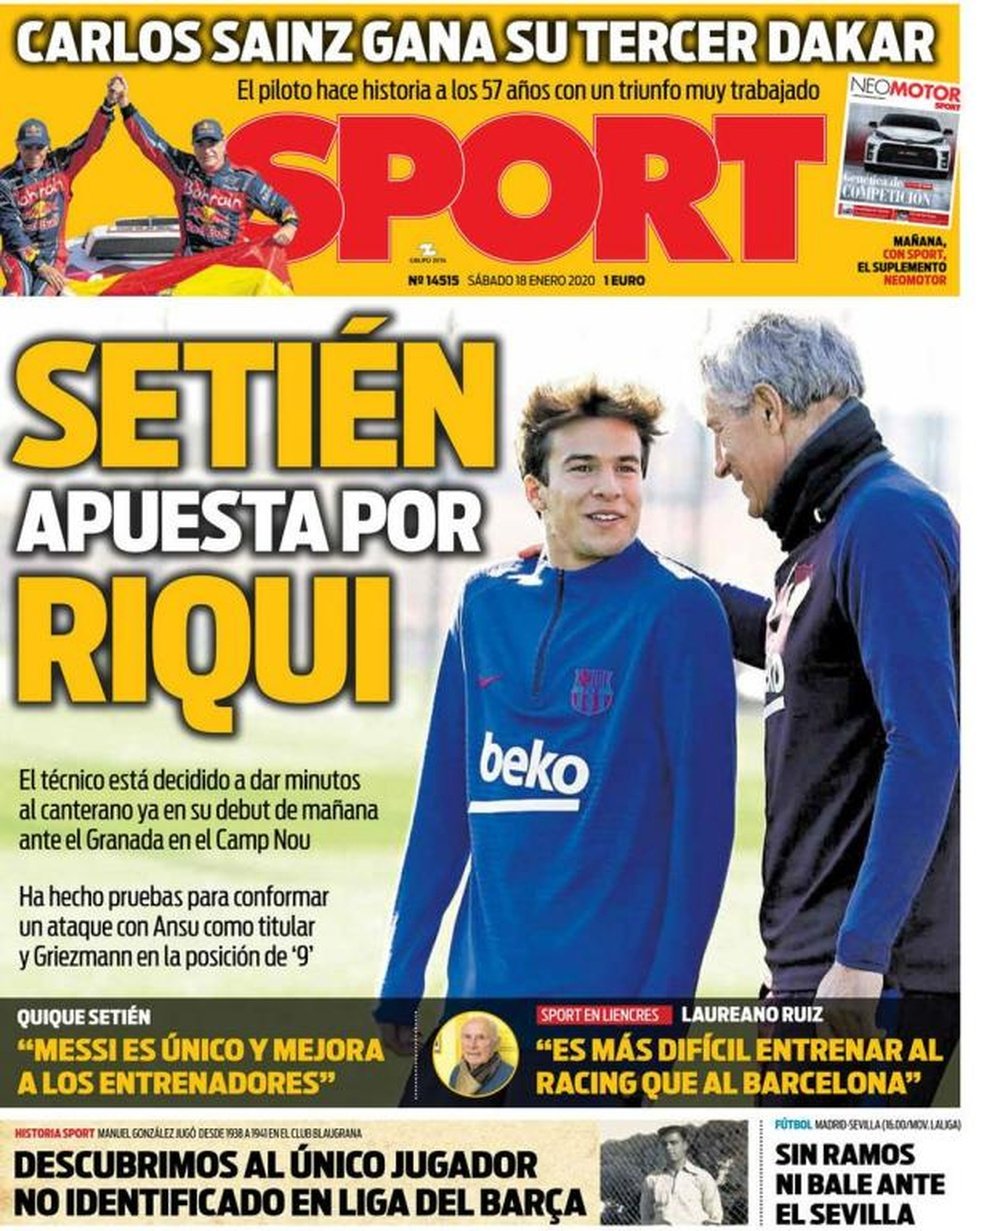 Capa do jornal Sport de 18-01-20. Sport